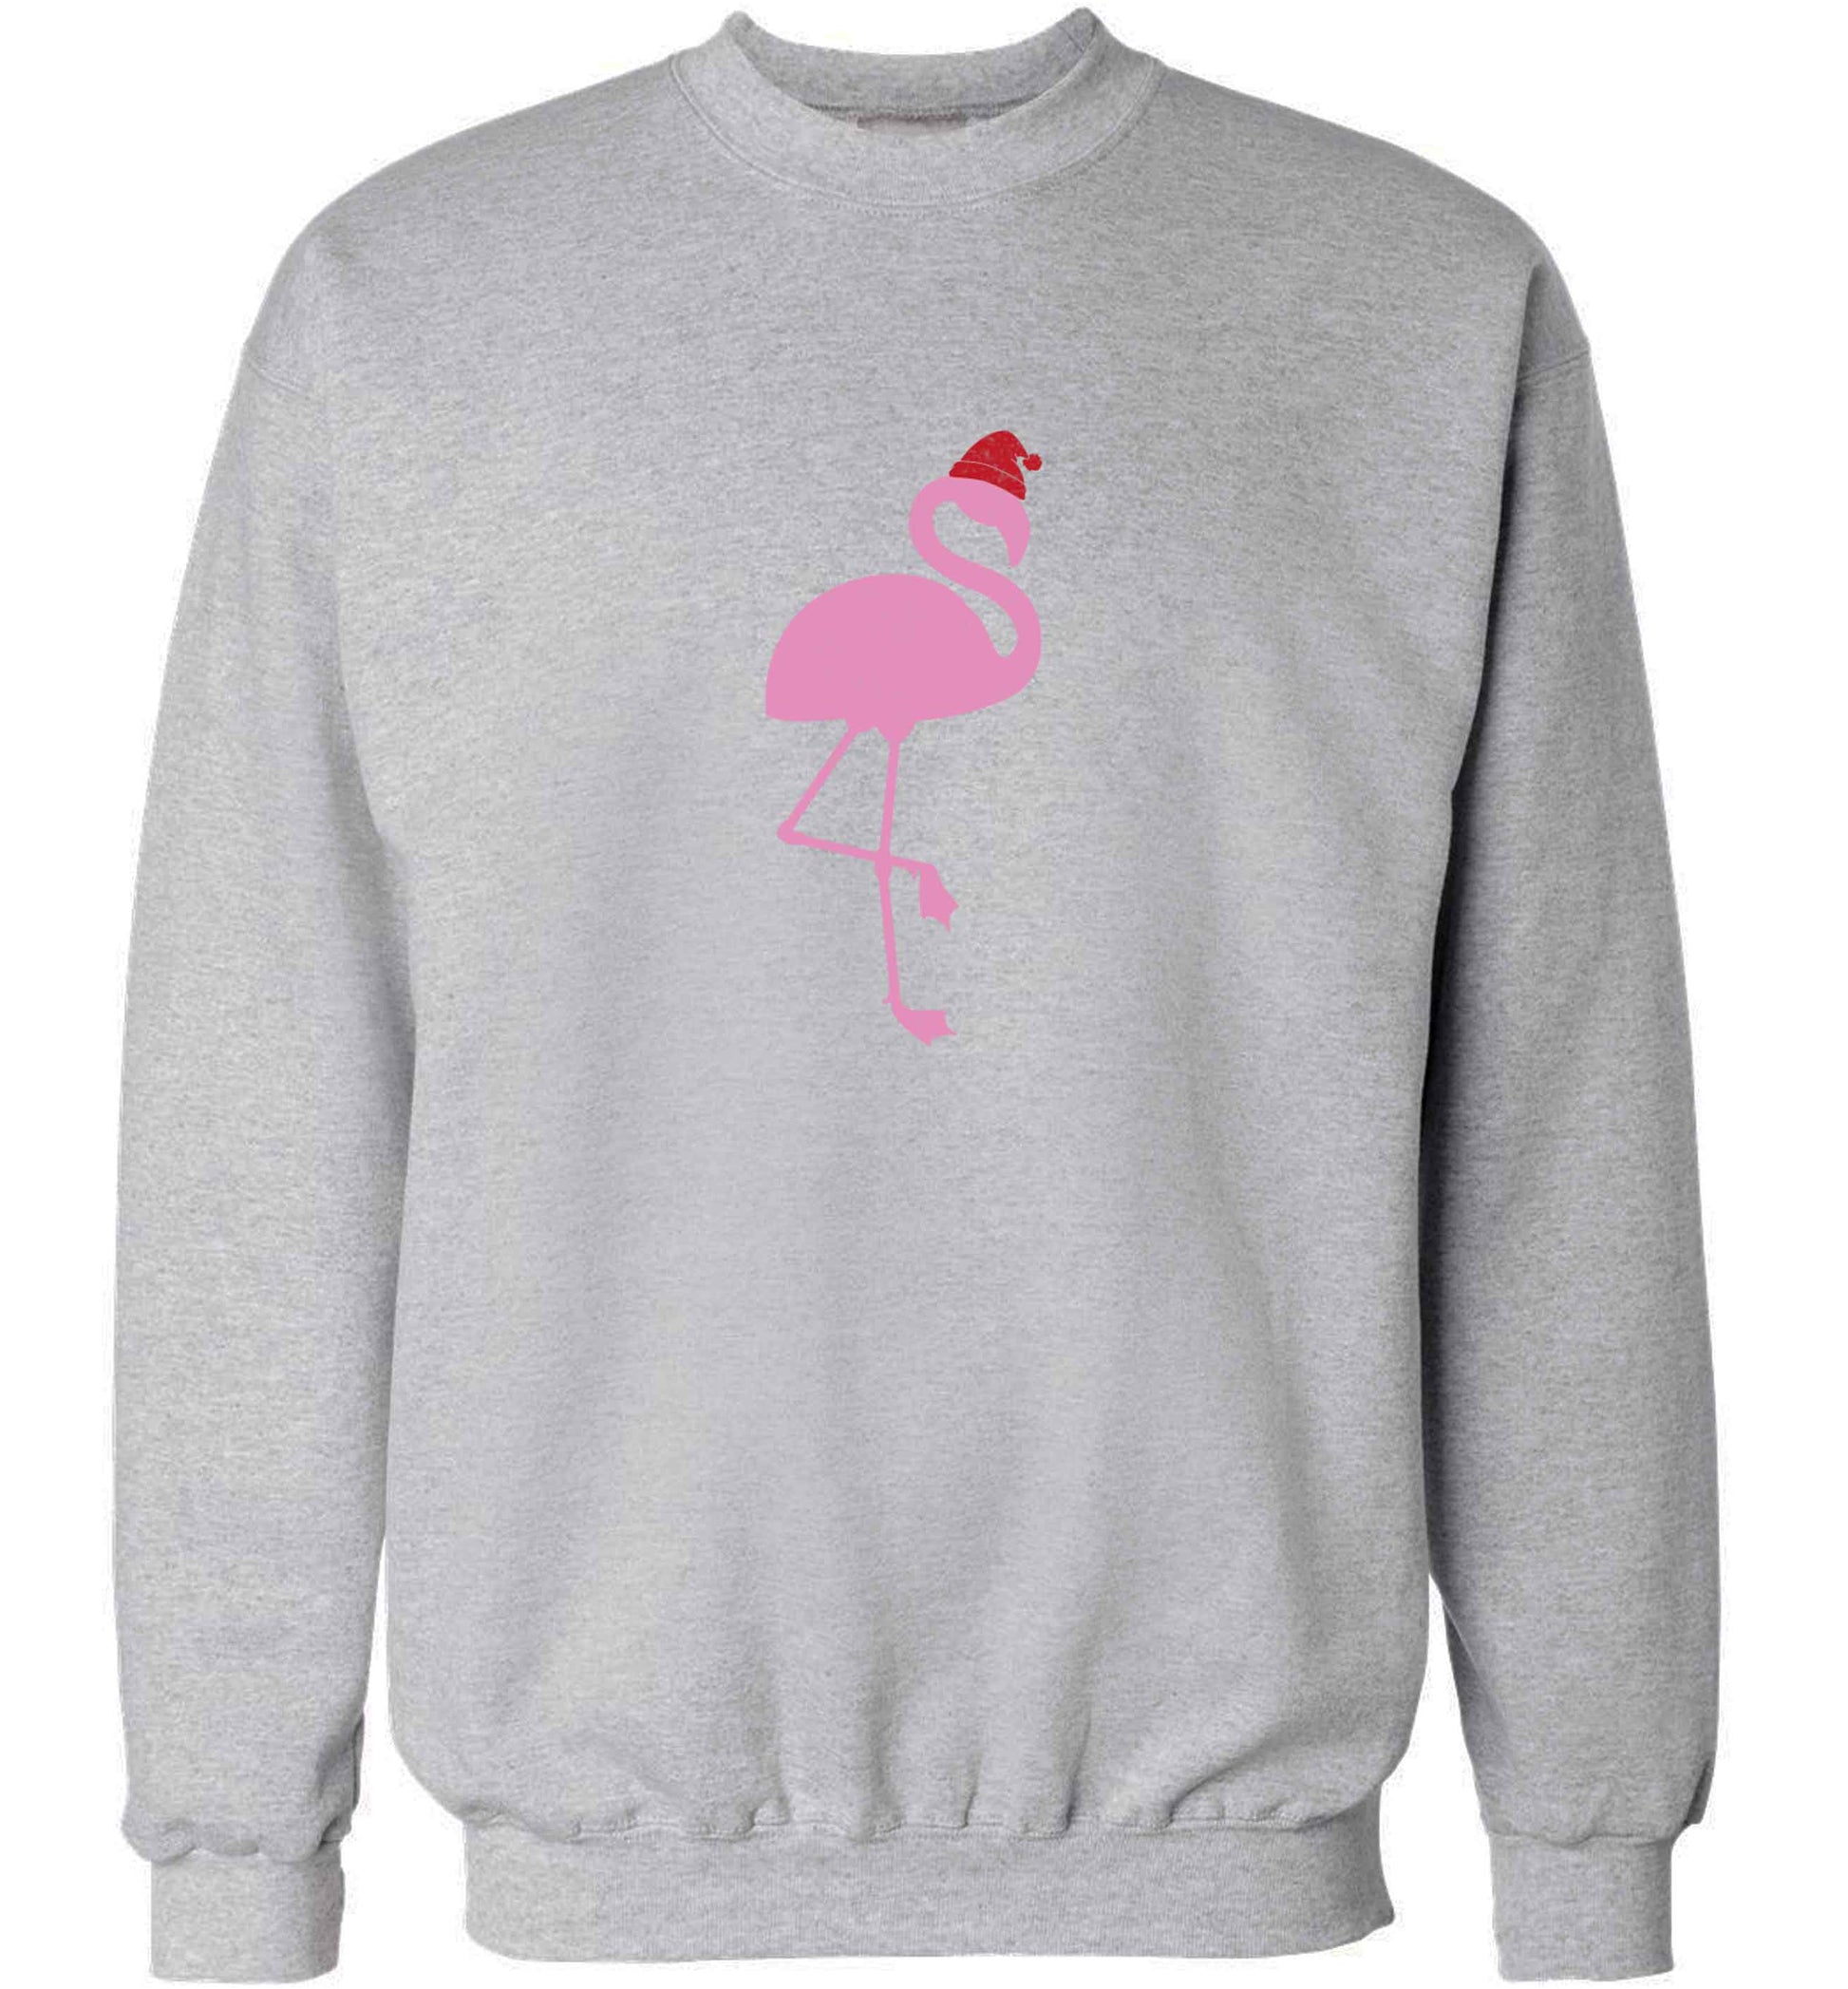 Pink flamingo santa adult's unisex grey sweater 2XL